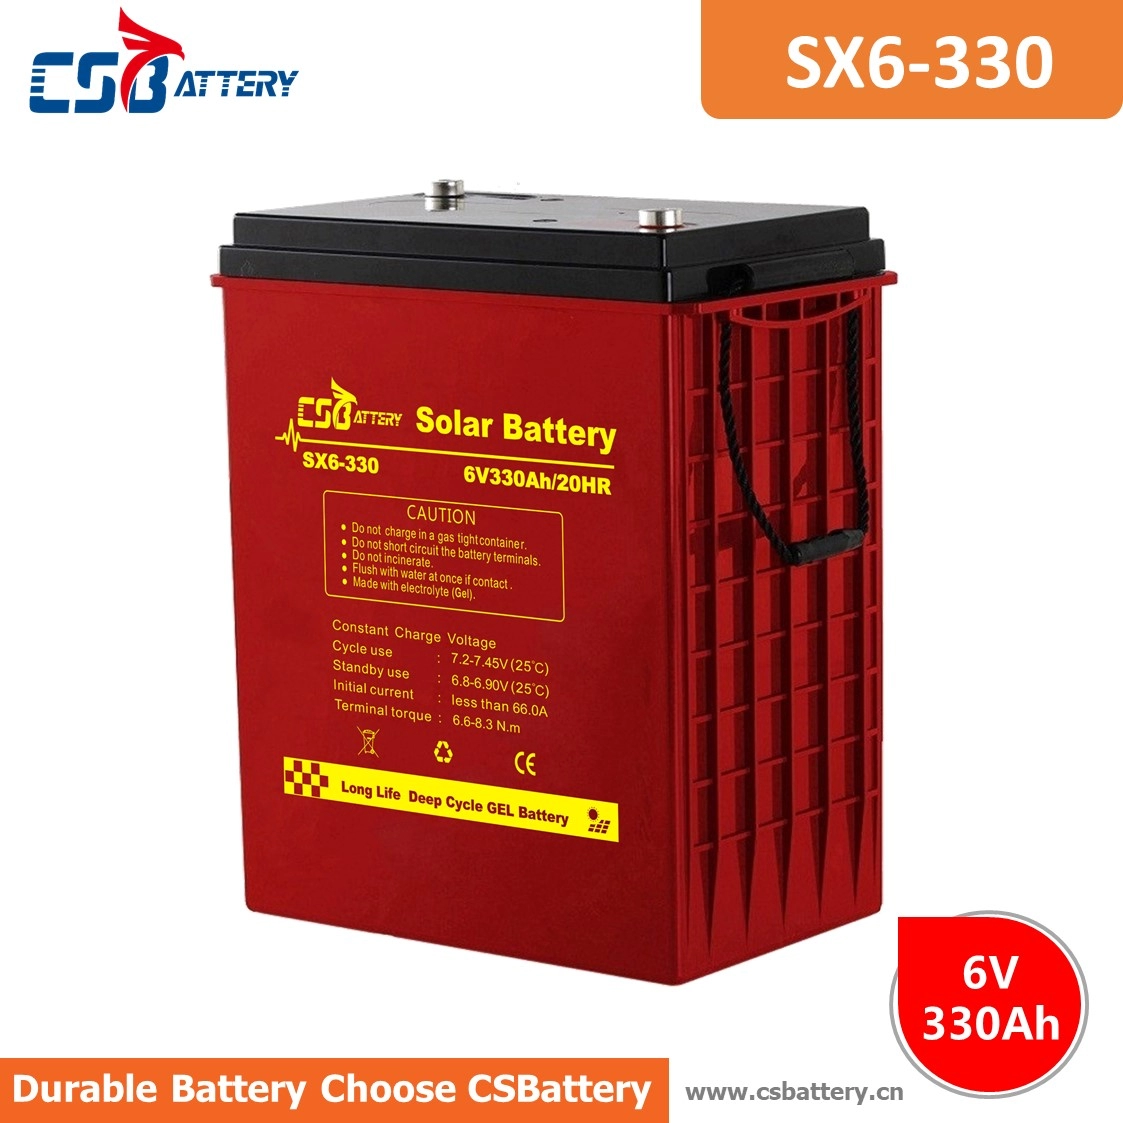 SX6-330 6V 330Ah Deep Cycle GEL Battery